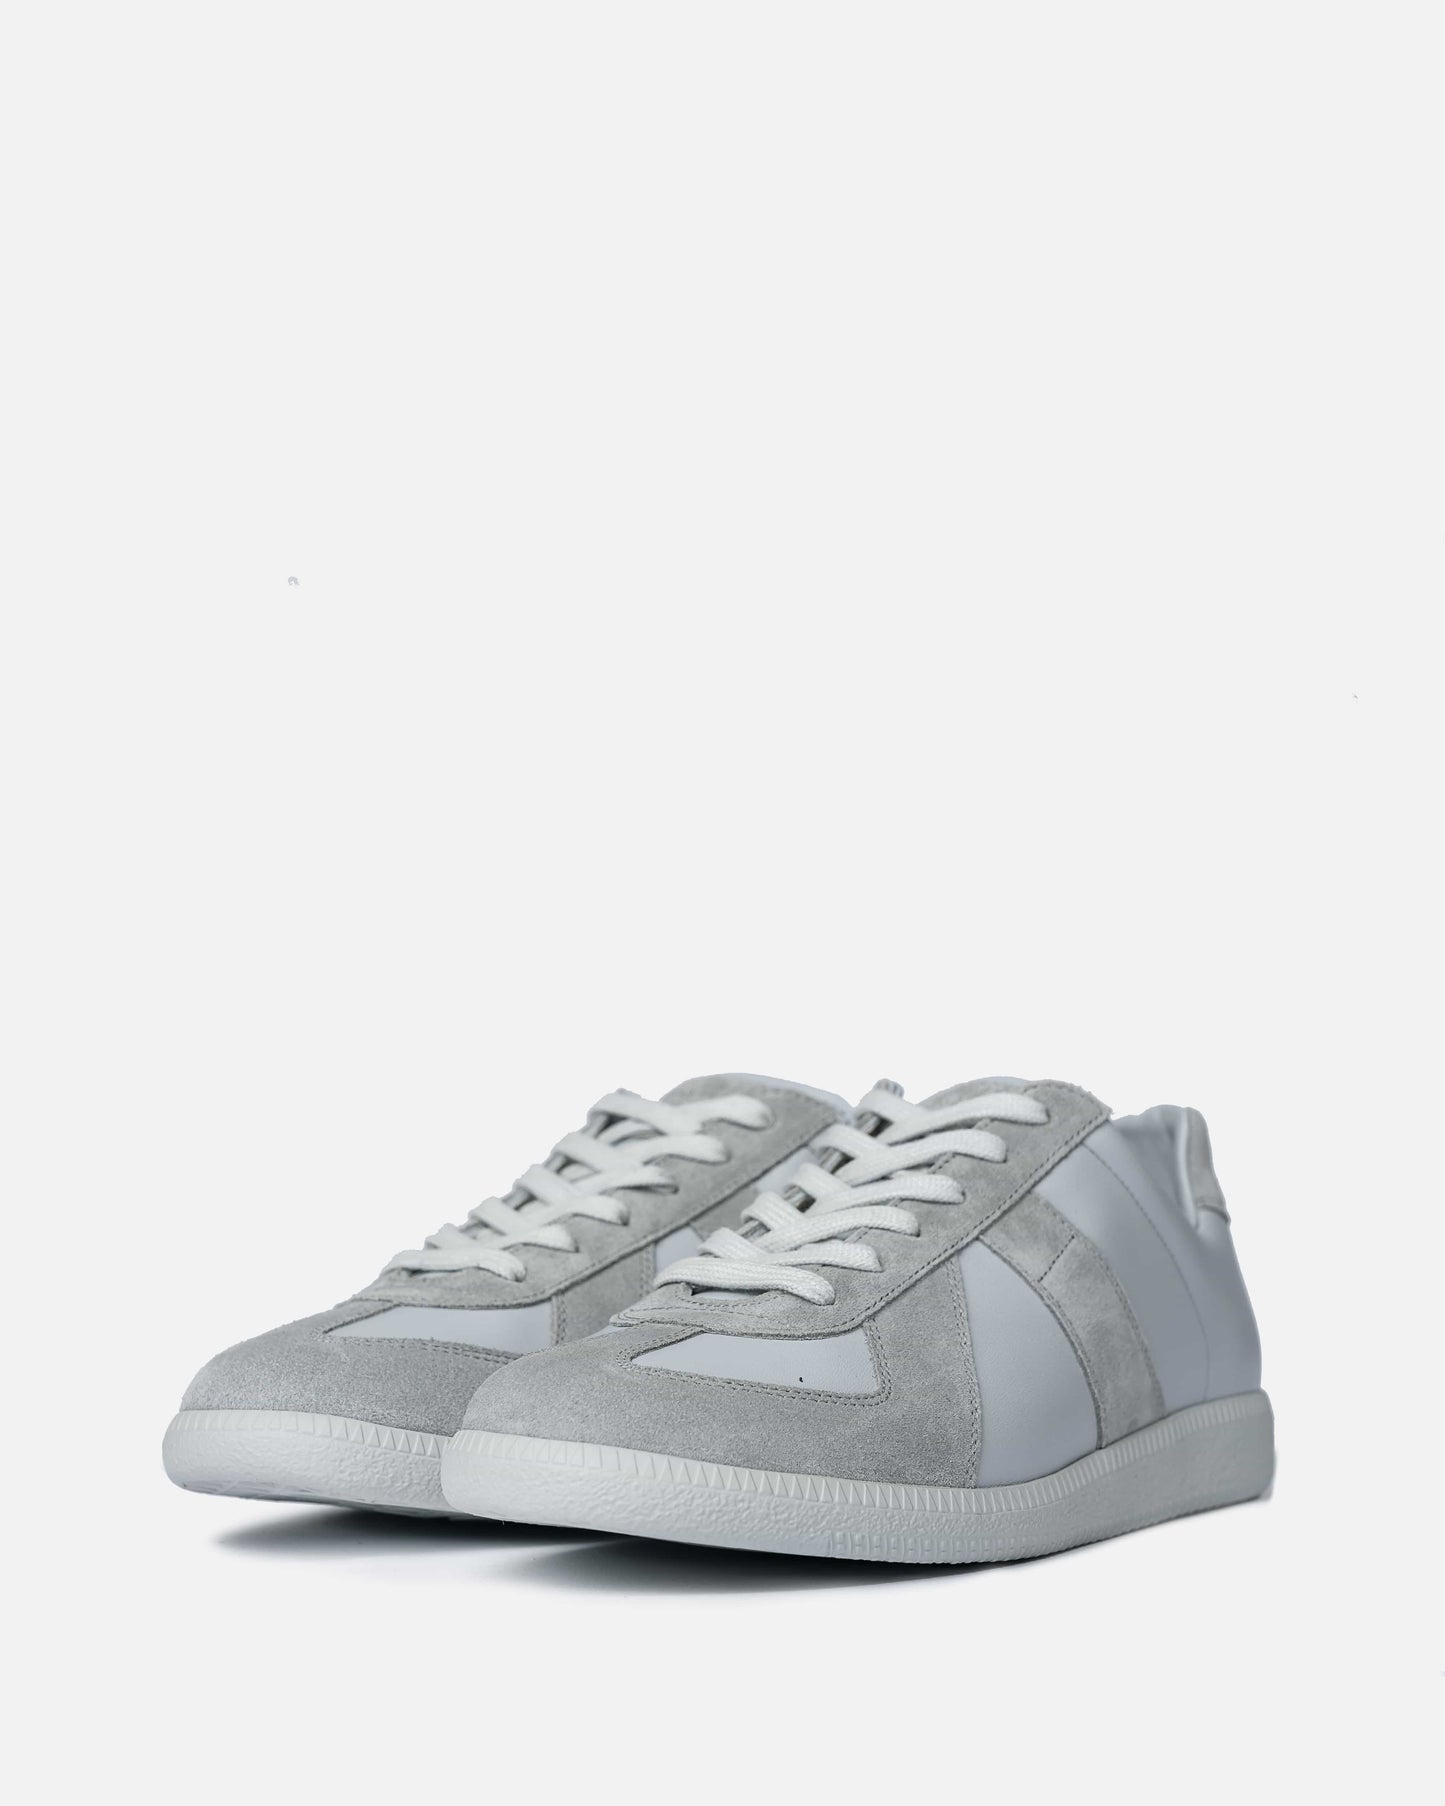 Maison Margiela Men's Shoes Replica Sneakers in Grey